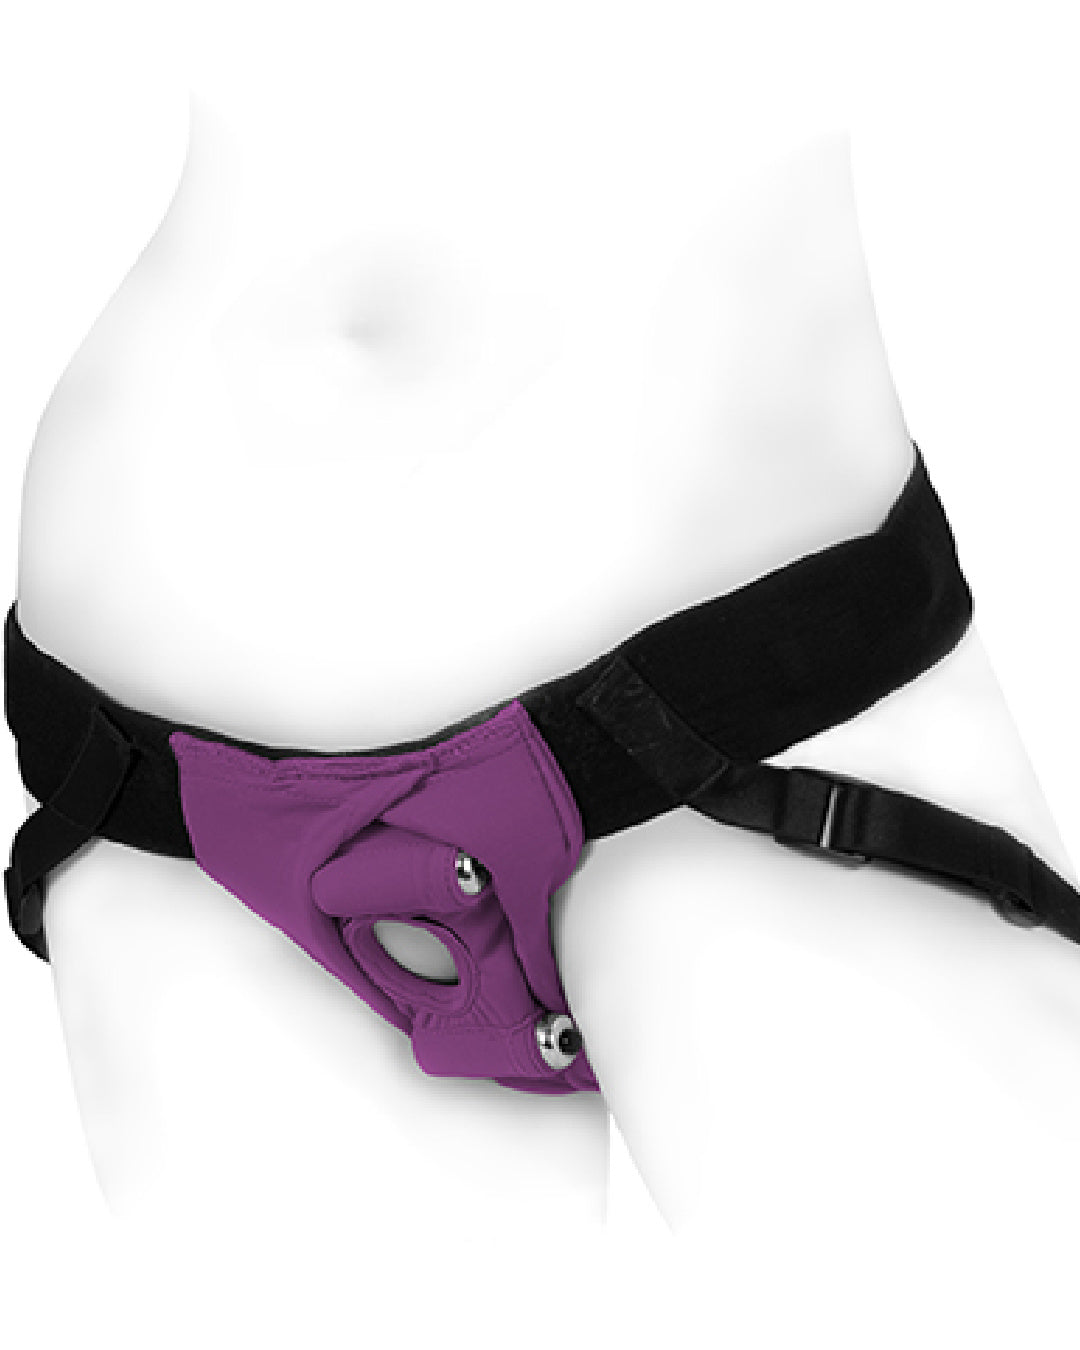 SpareParts Joque Adjustable Plus Size Purple Strap-on Harness